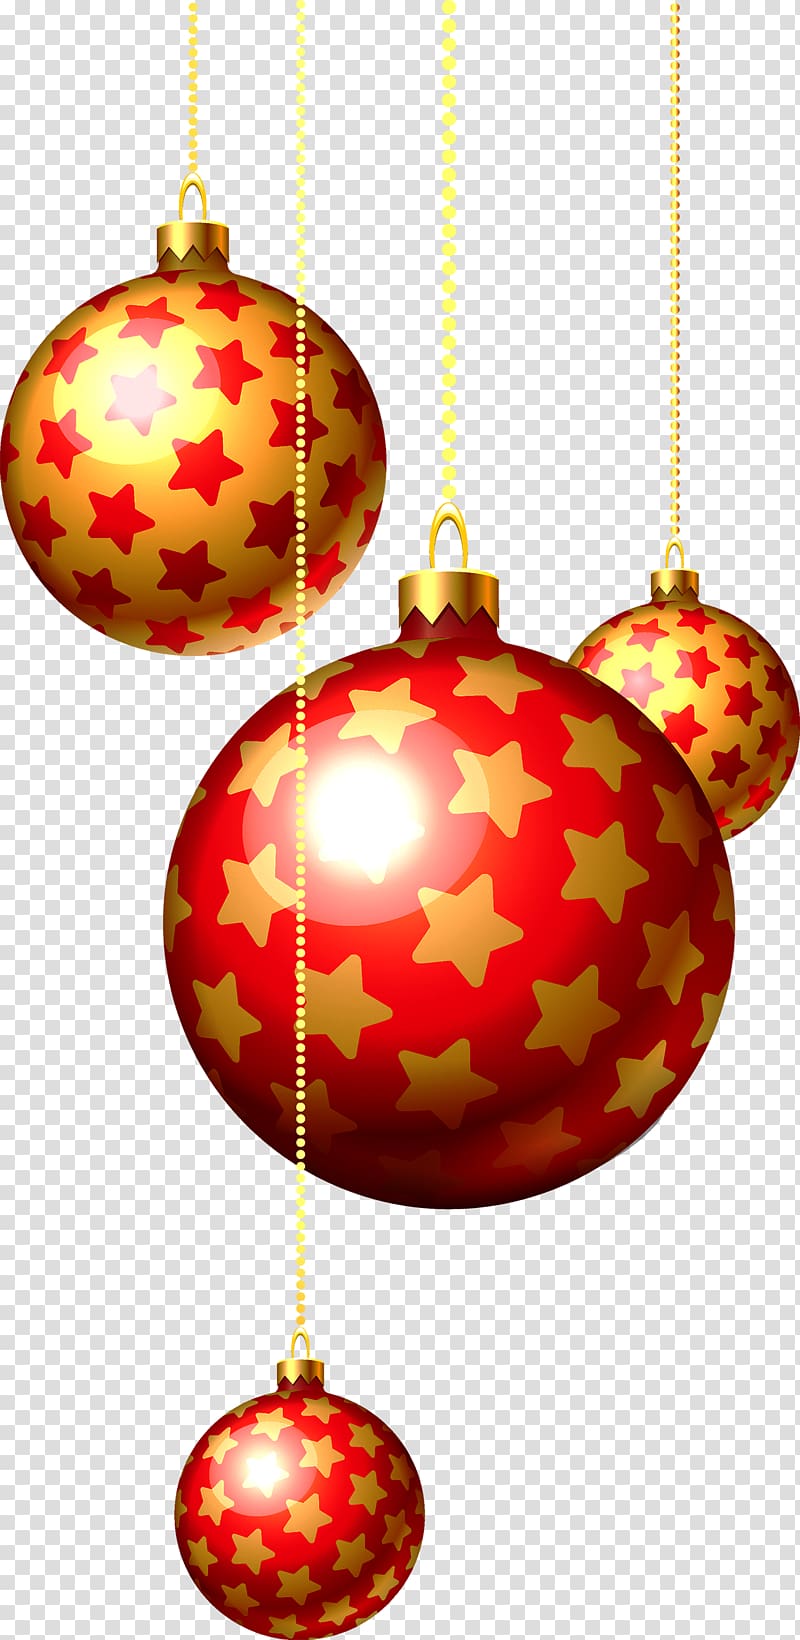 Christmas decoration Santa Claus Christmas ornament, Christmas balls transparent background PNG clipart